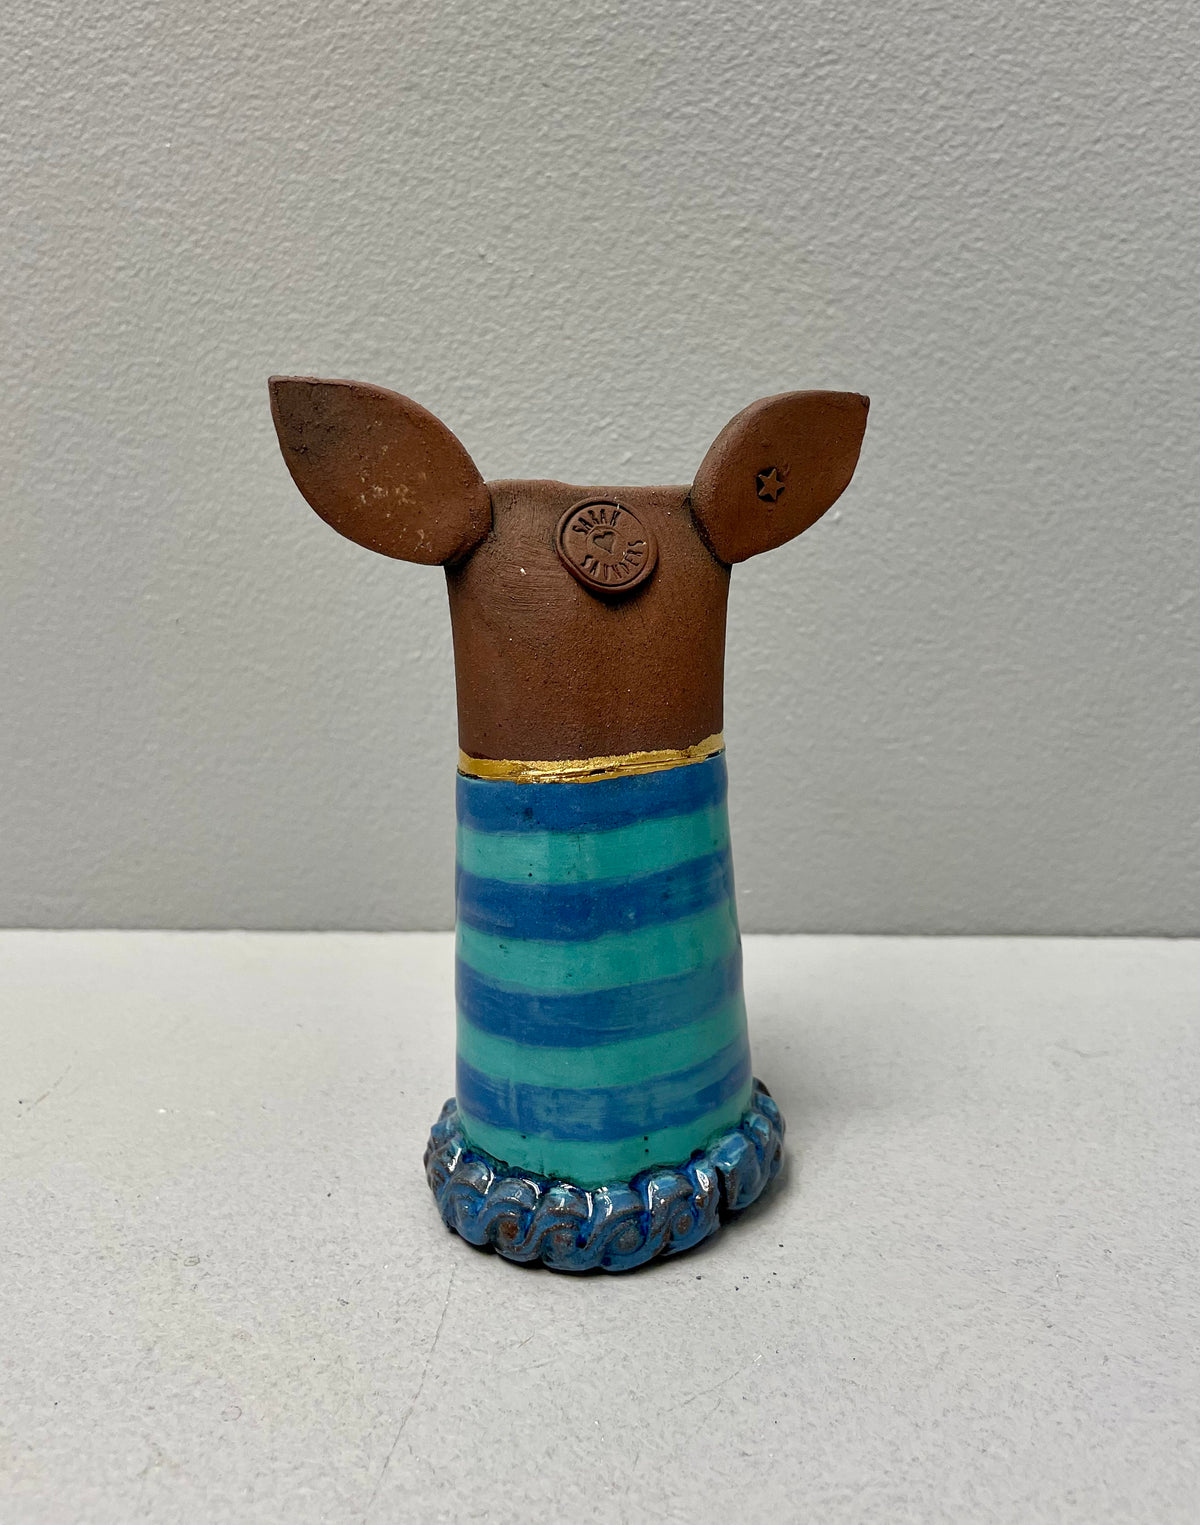 Small Dog - Ceramic Sculpture by Sarah Saunders